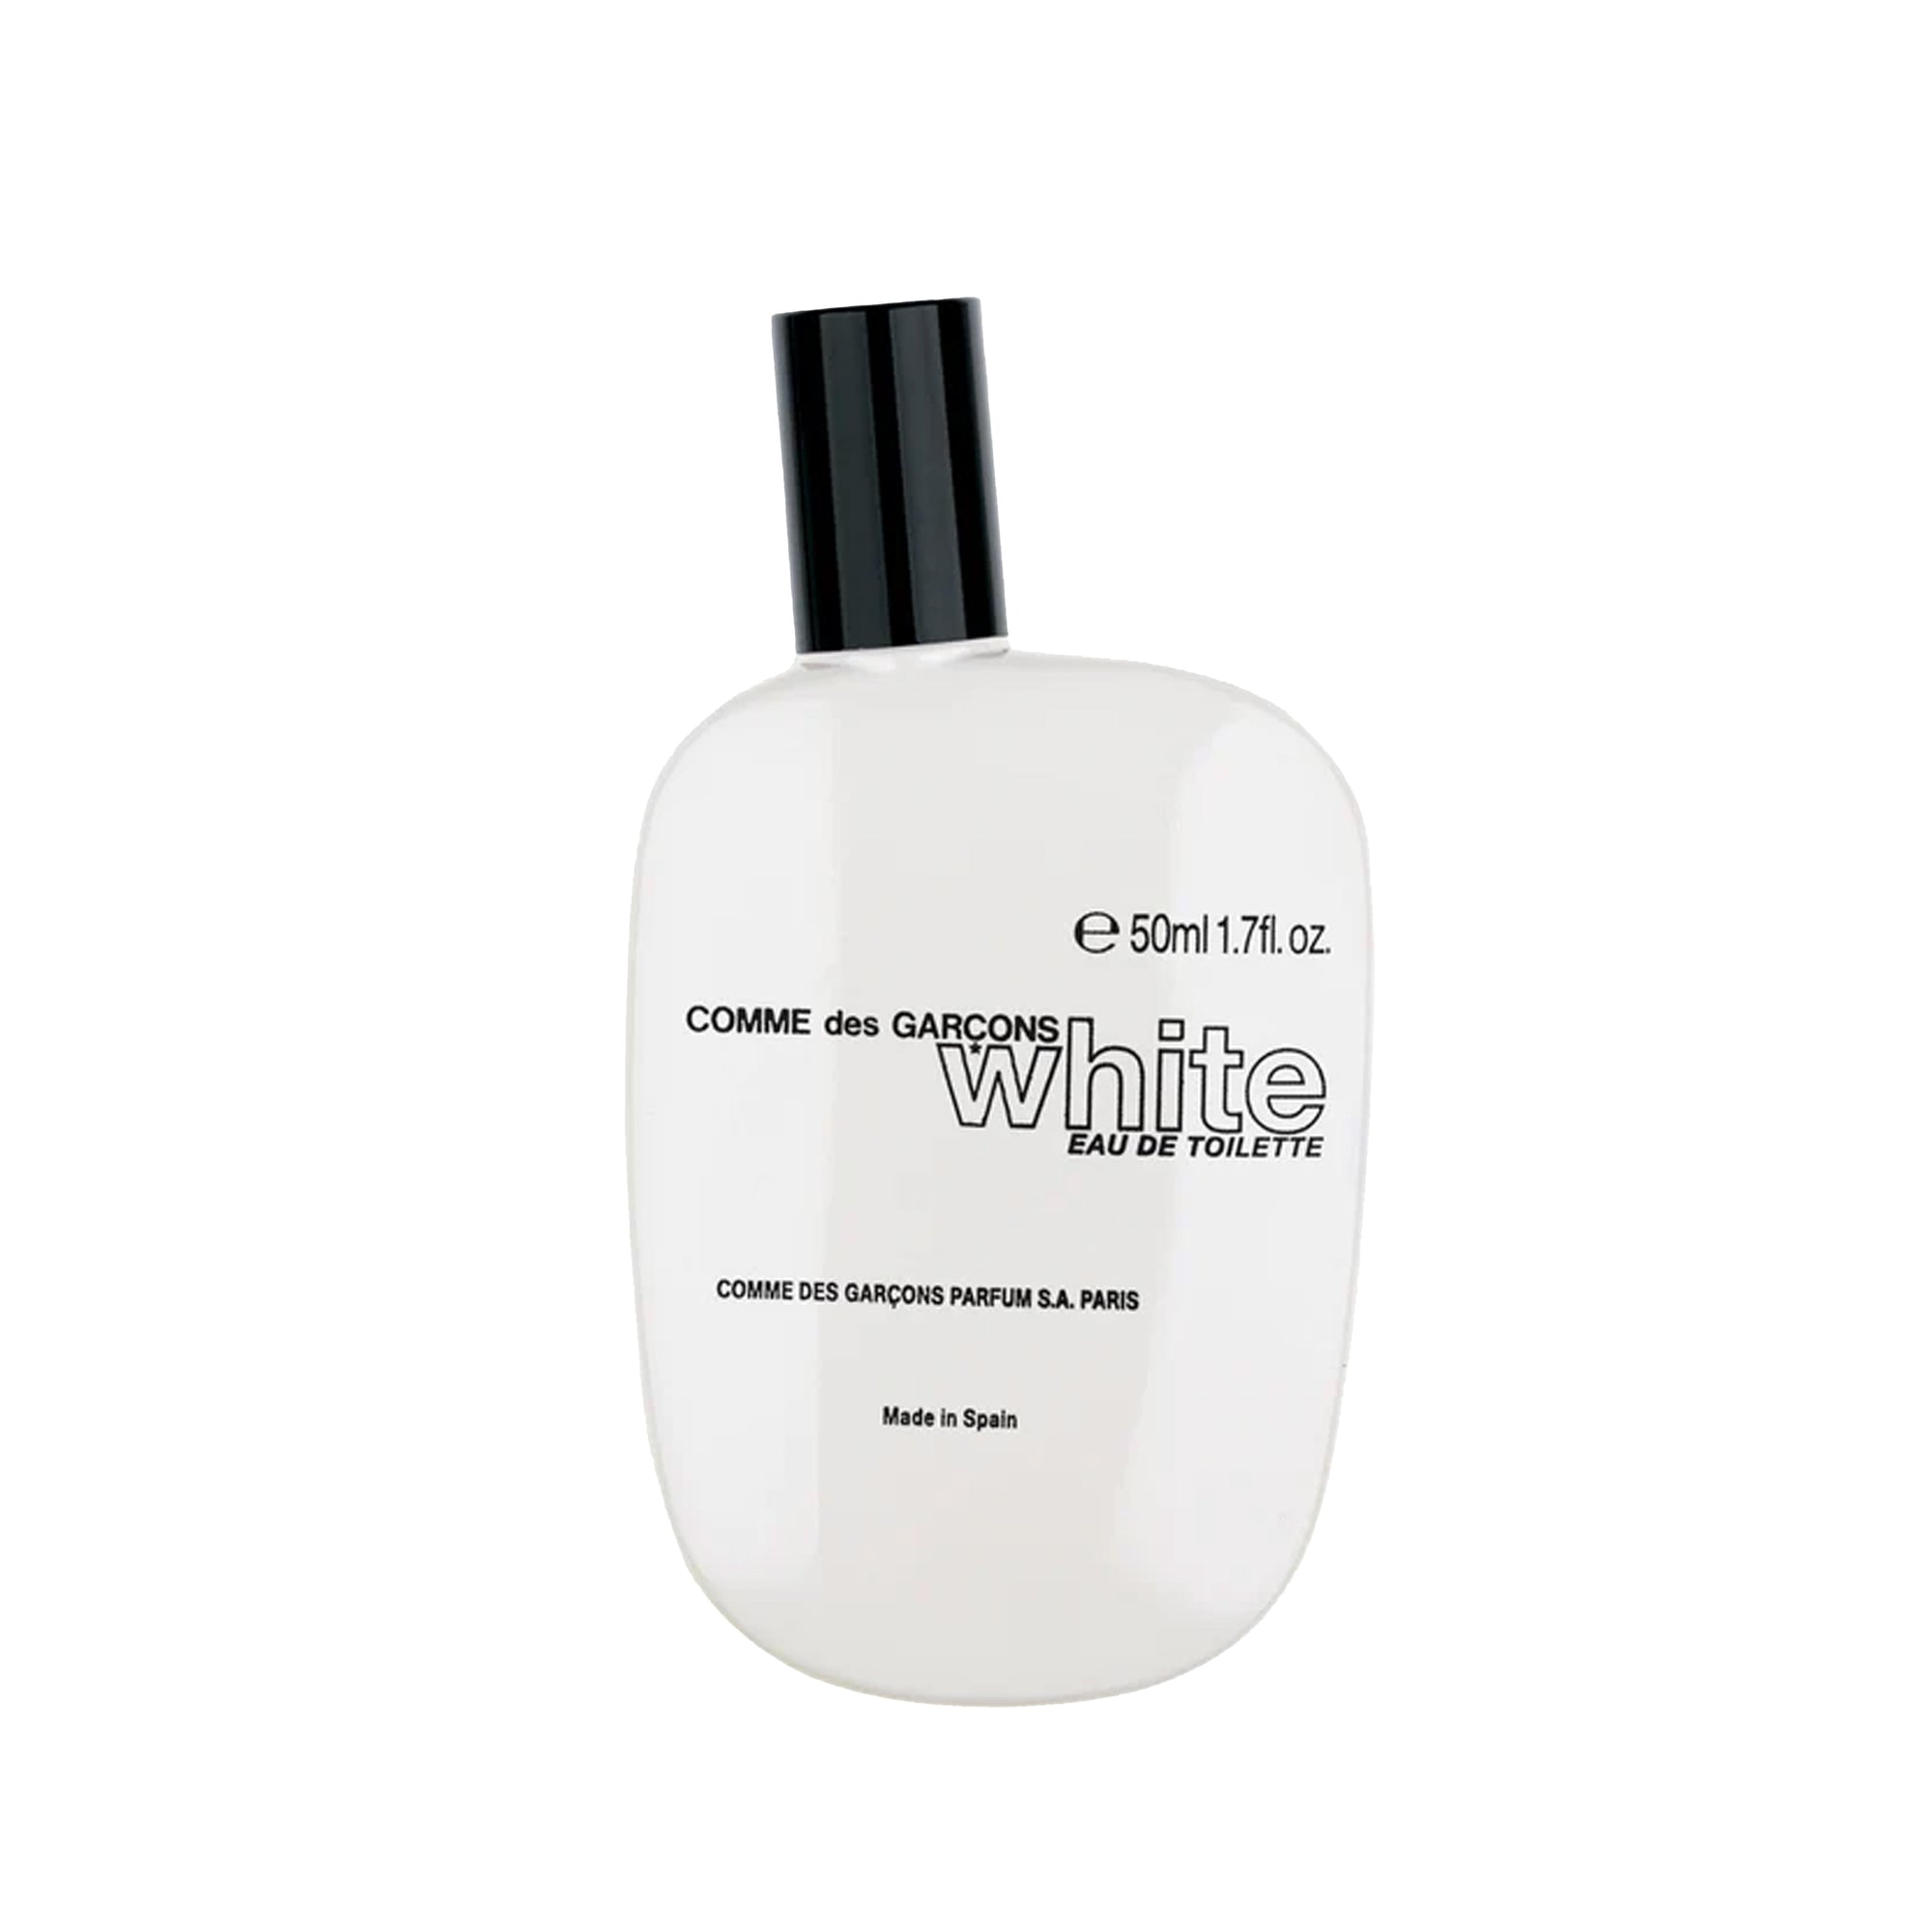 CDG Parfum - White Eau de Toilette - (50ml natural spray) view 1